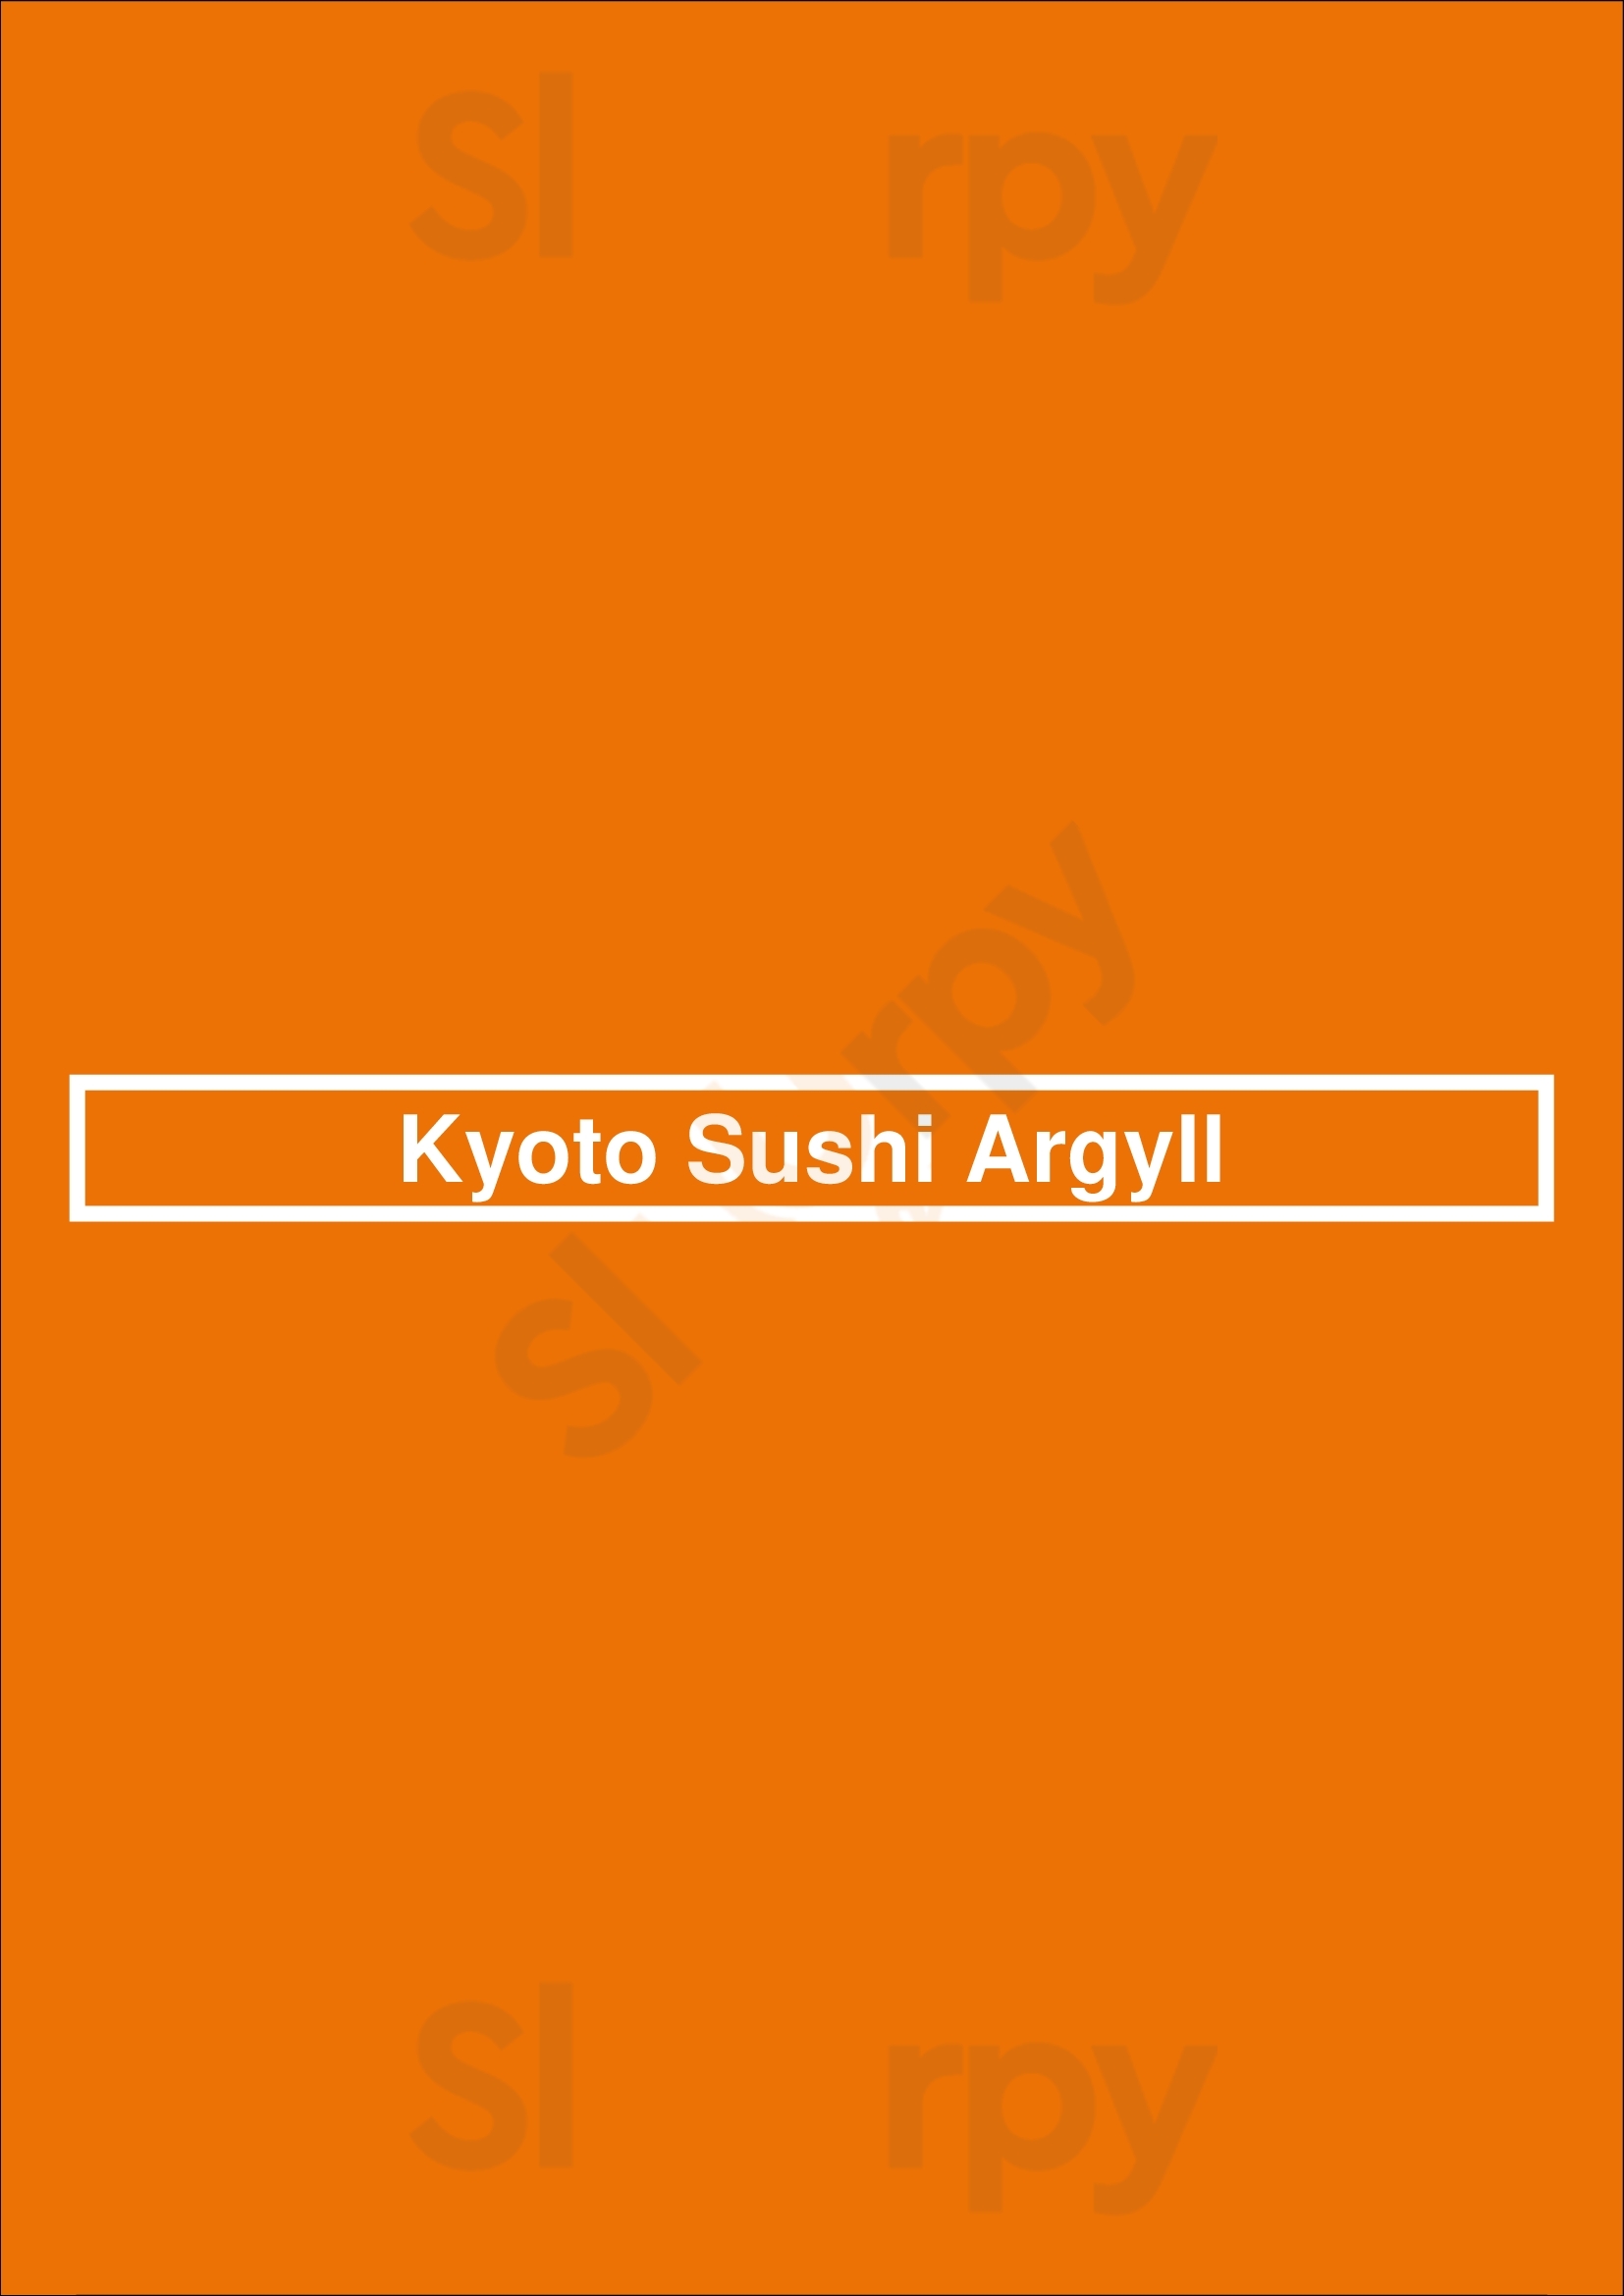 Kyoto Sushi Argyll Edmonton Menu - 1